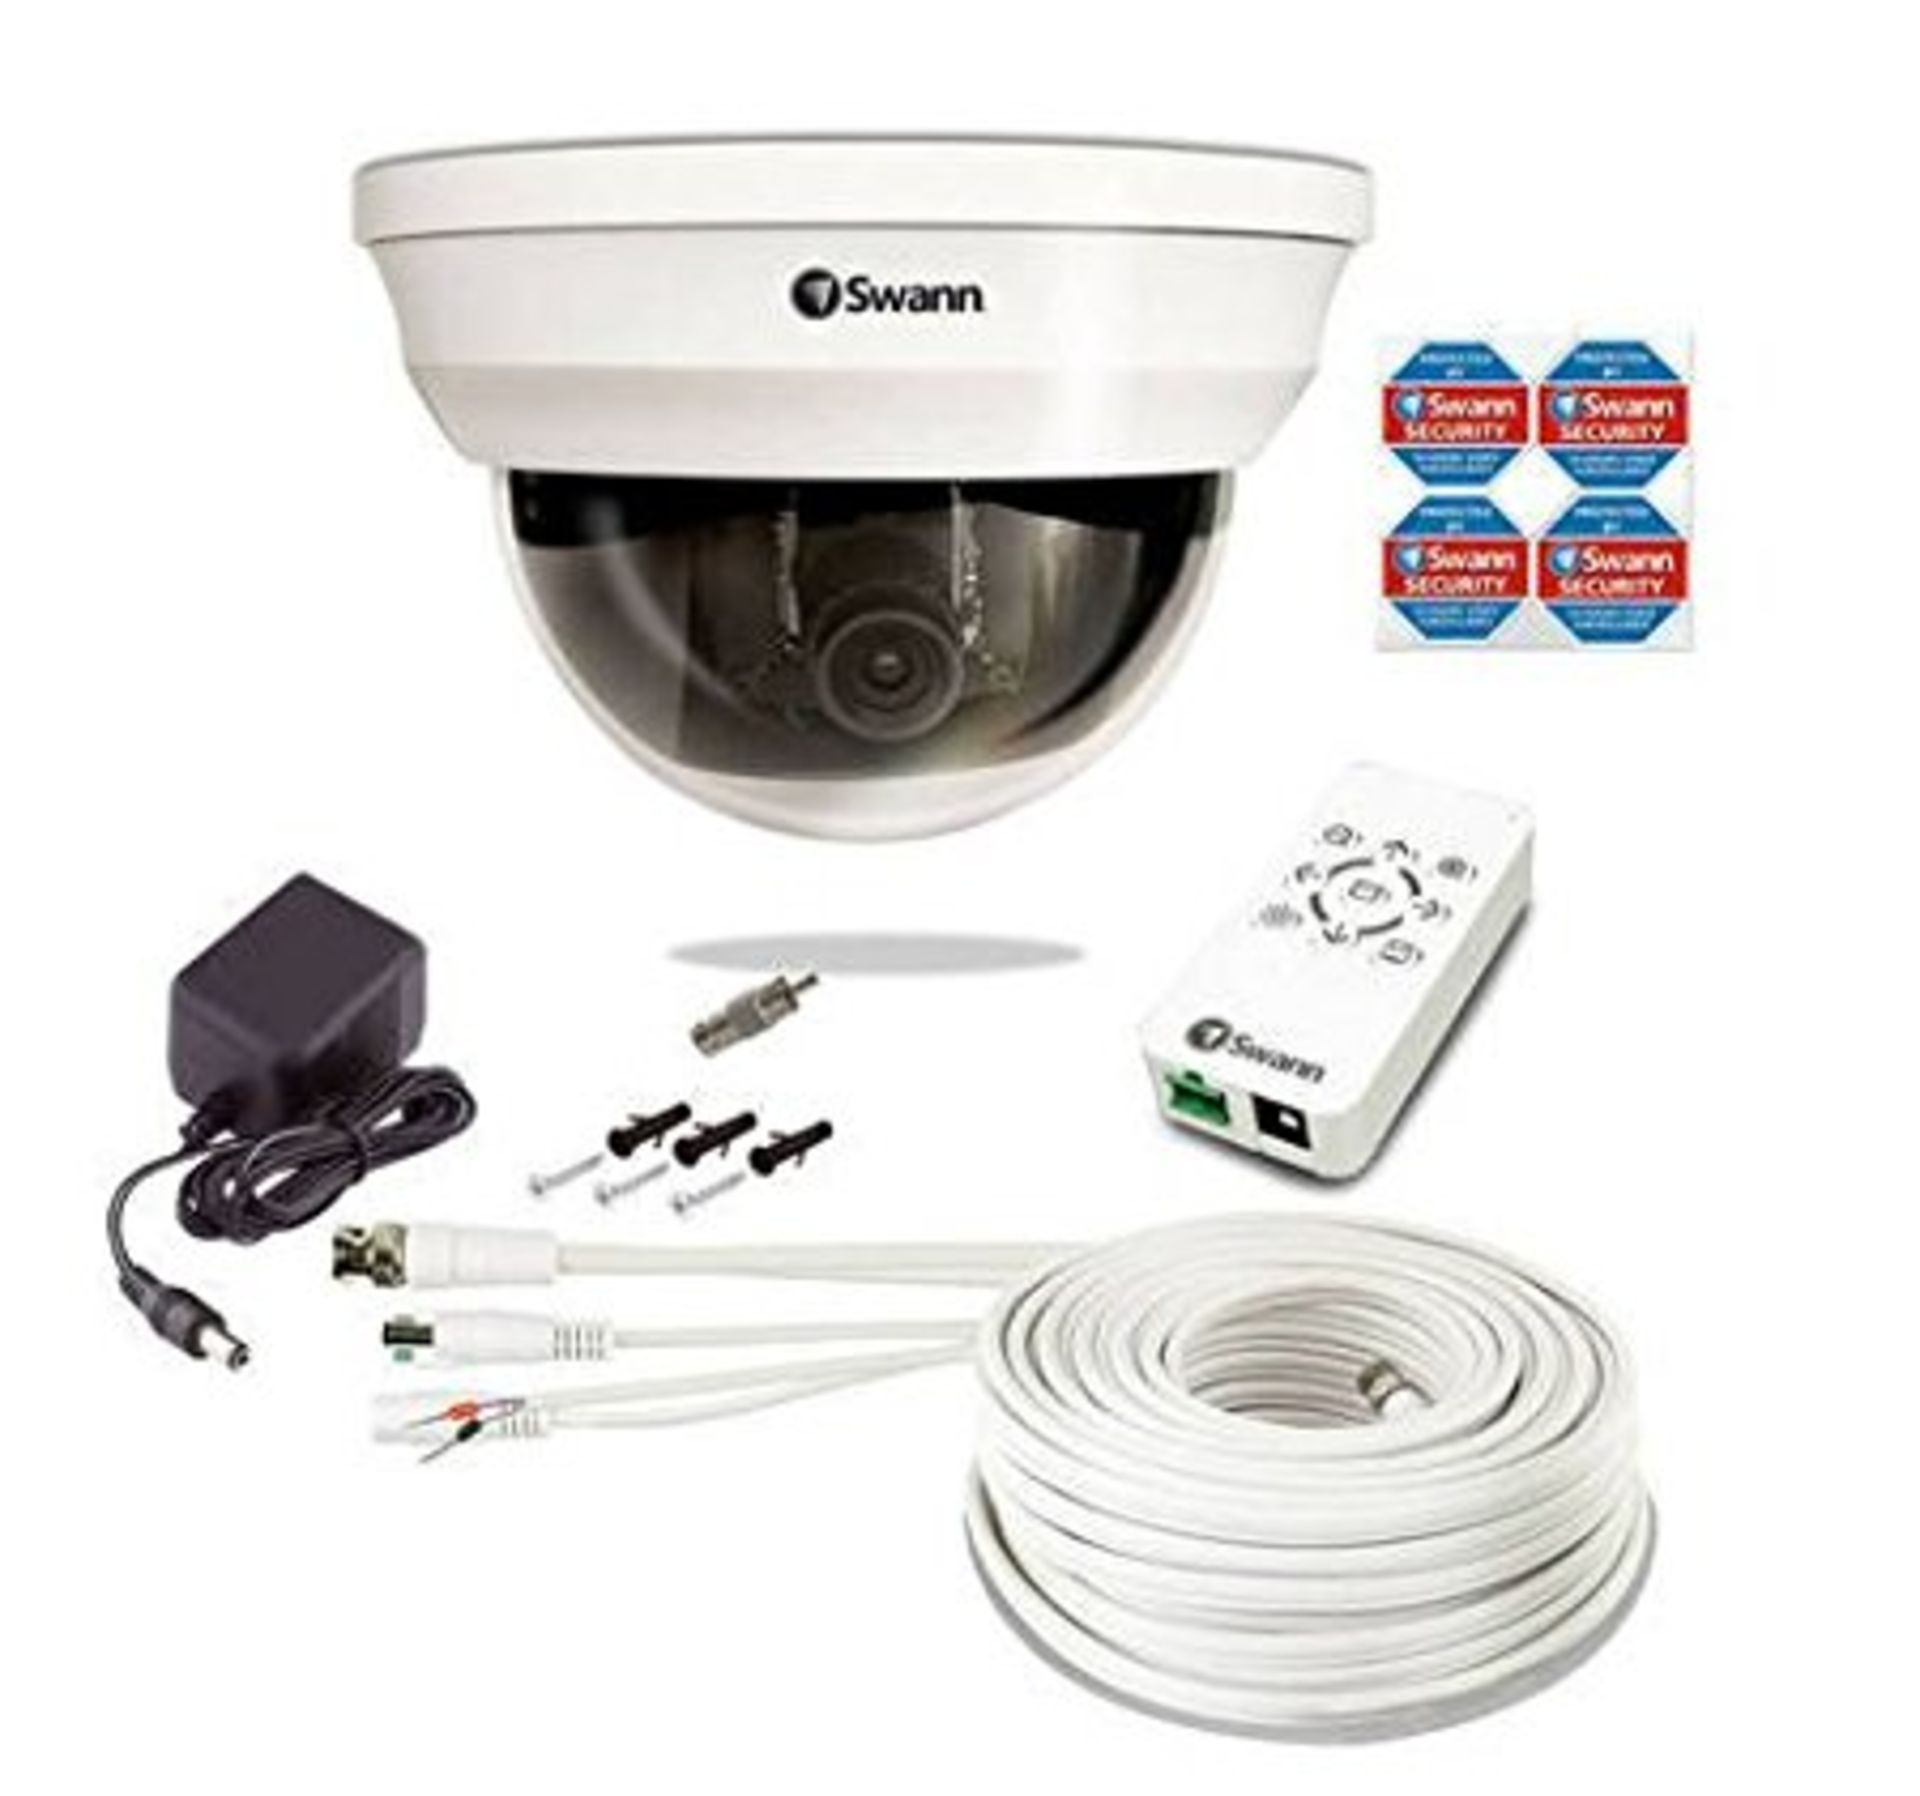 V Brand New Swann PRO-861 Super Wide Angle Security Dome Camera - 850TVL - Vari Focal 2.8mm 12mm